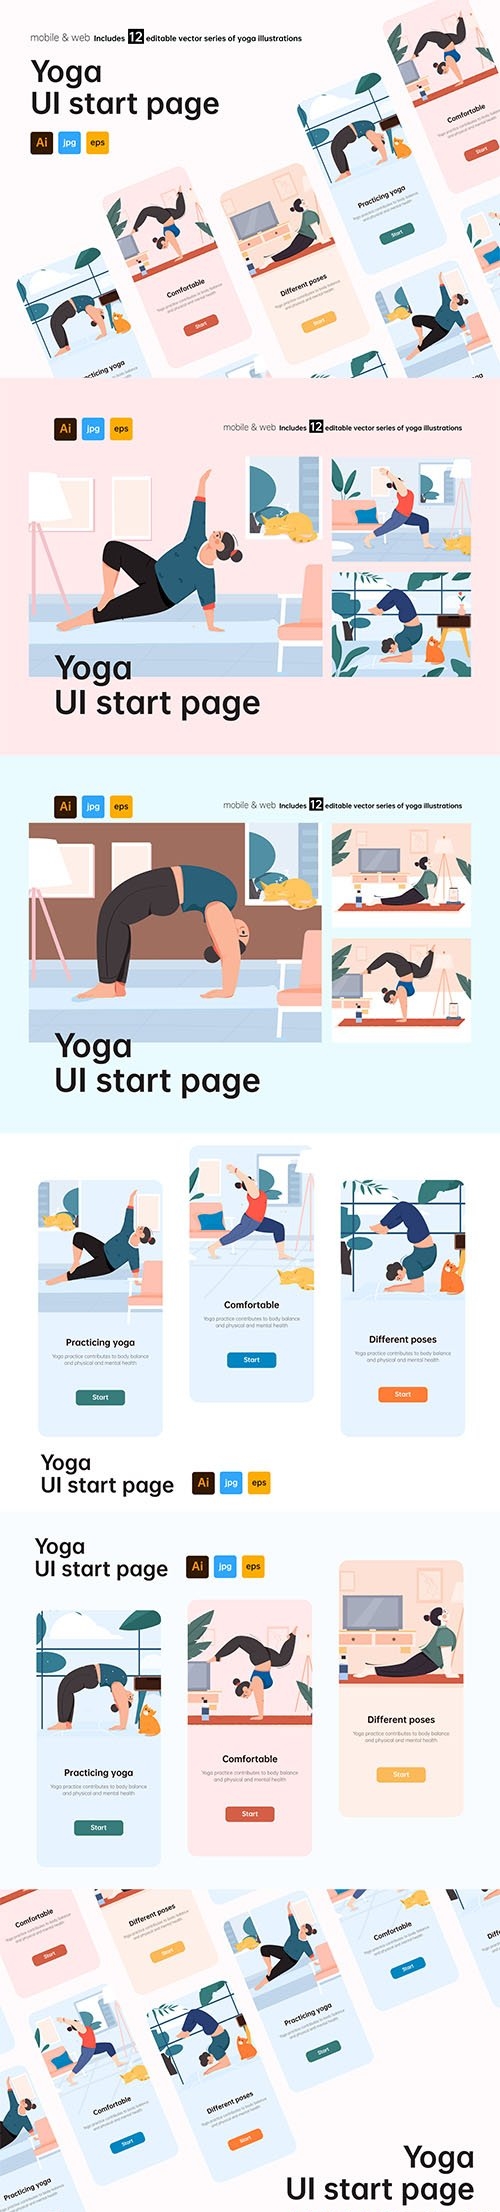 Yoga UI start page